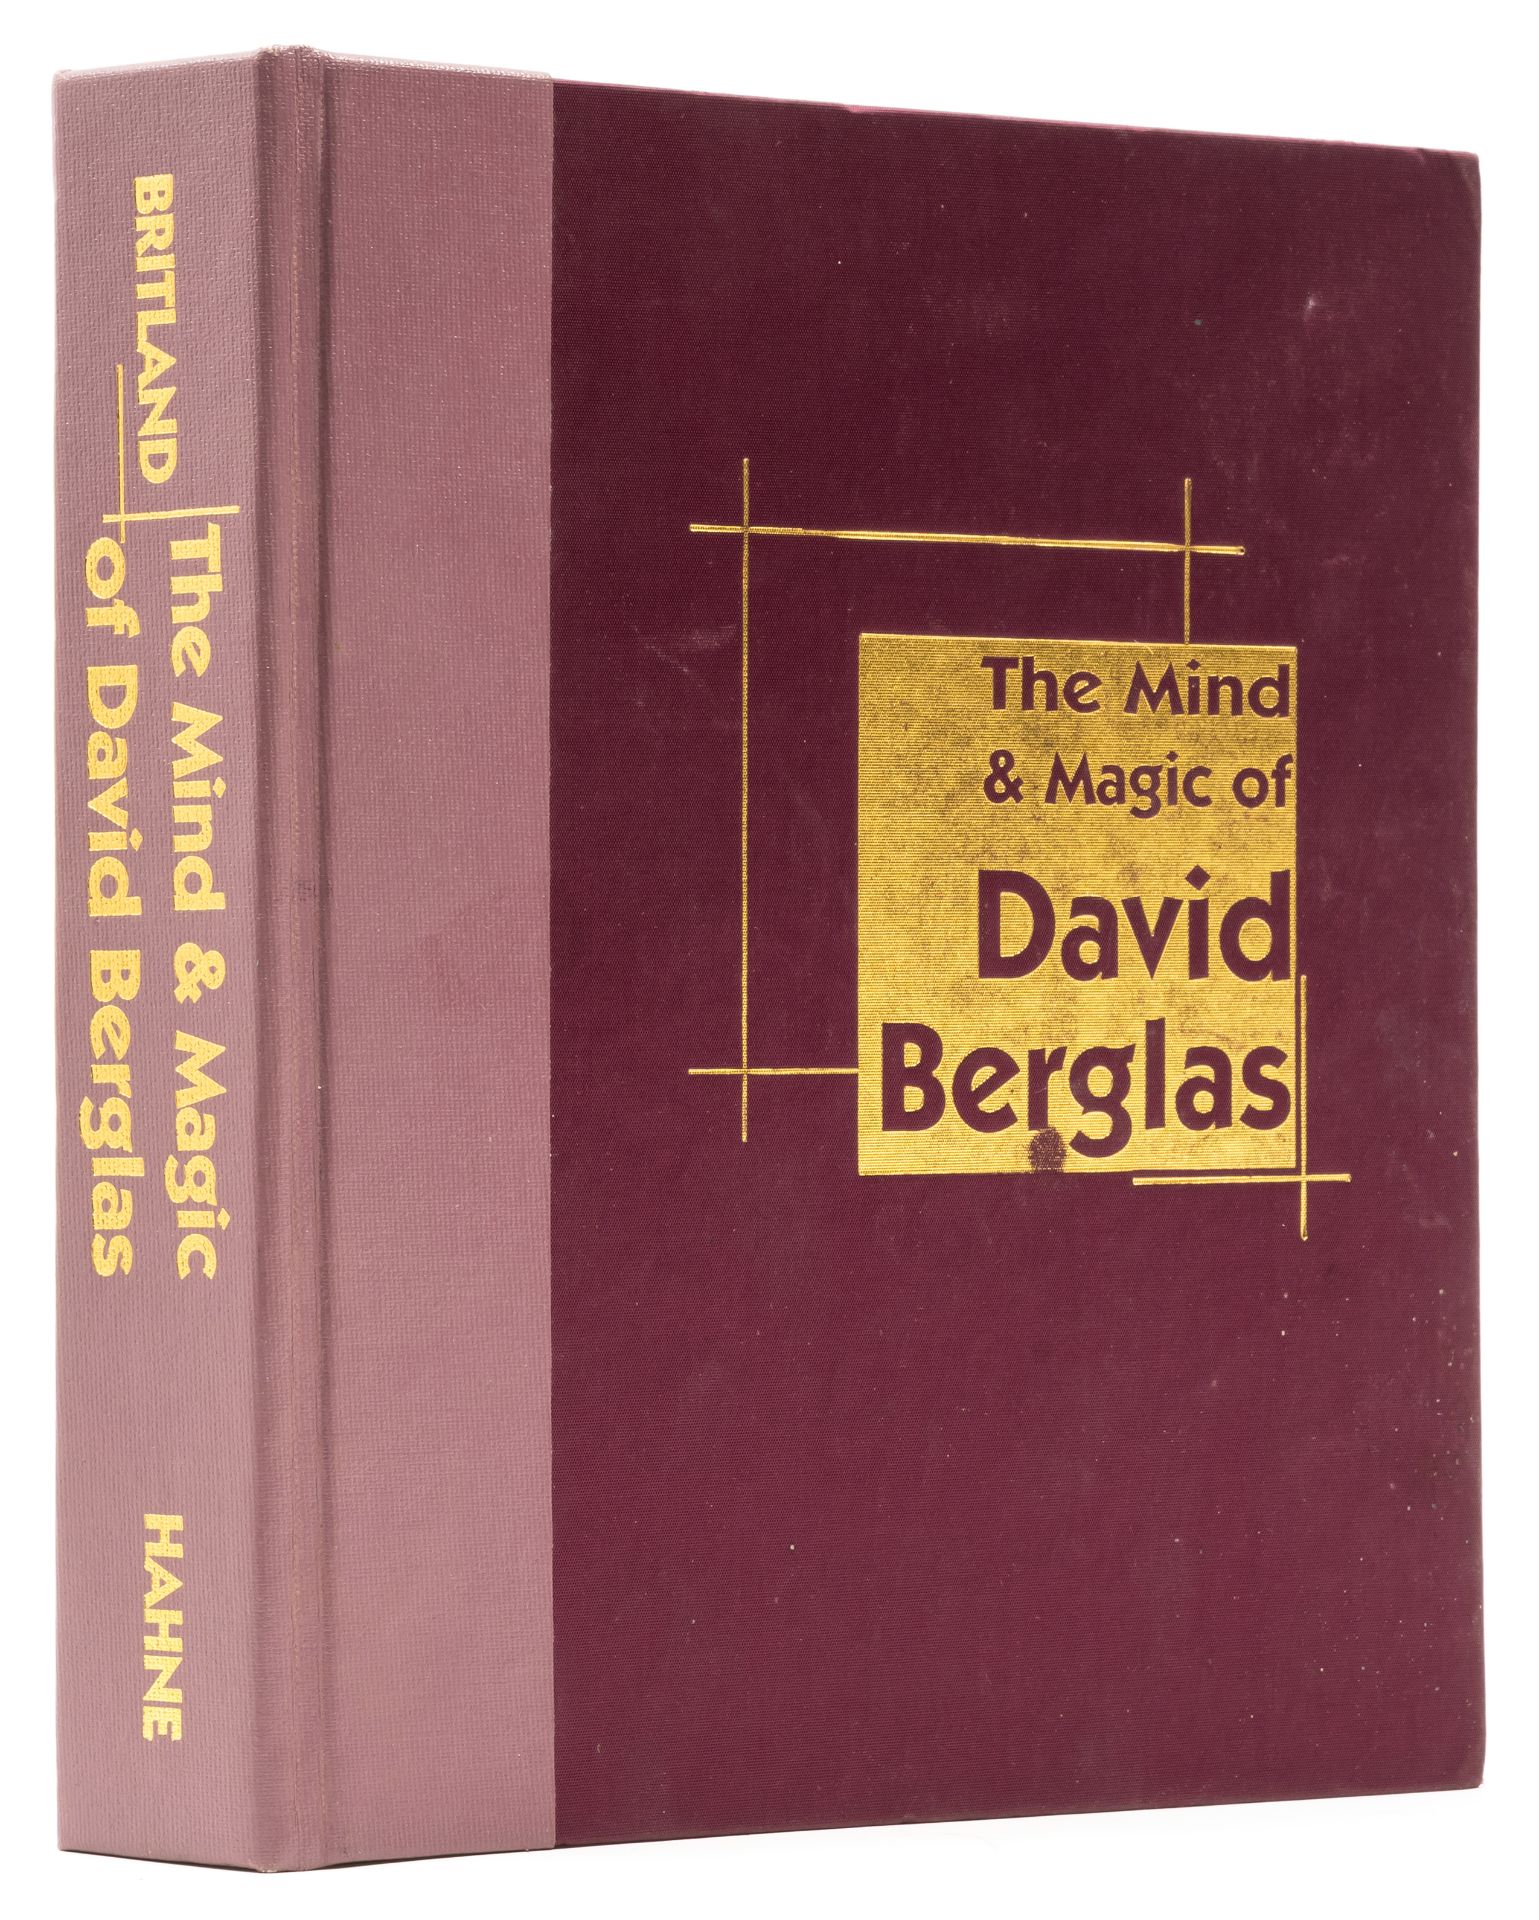 Conjuring.- Berglas (David) The Mind & Magic of David Berglas, one of 1,000 copies, Hahne, 2002